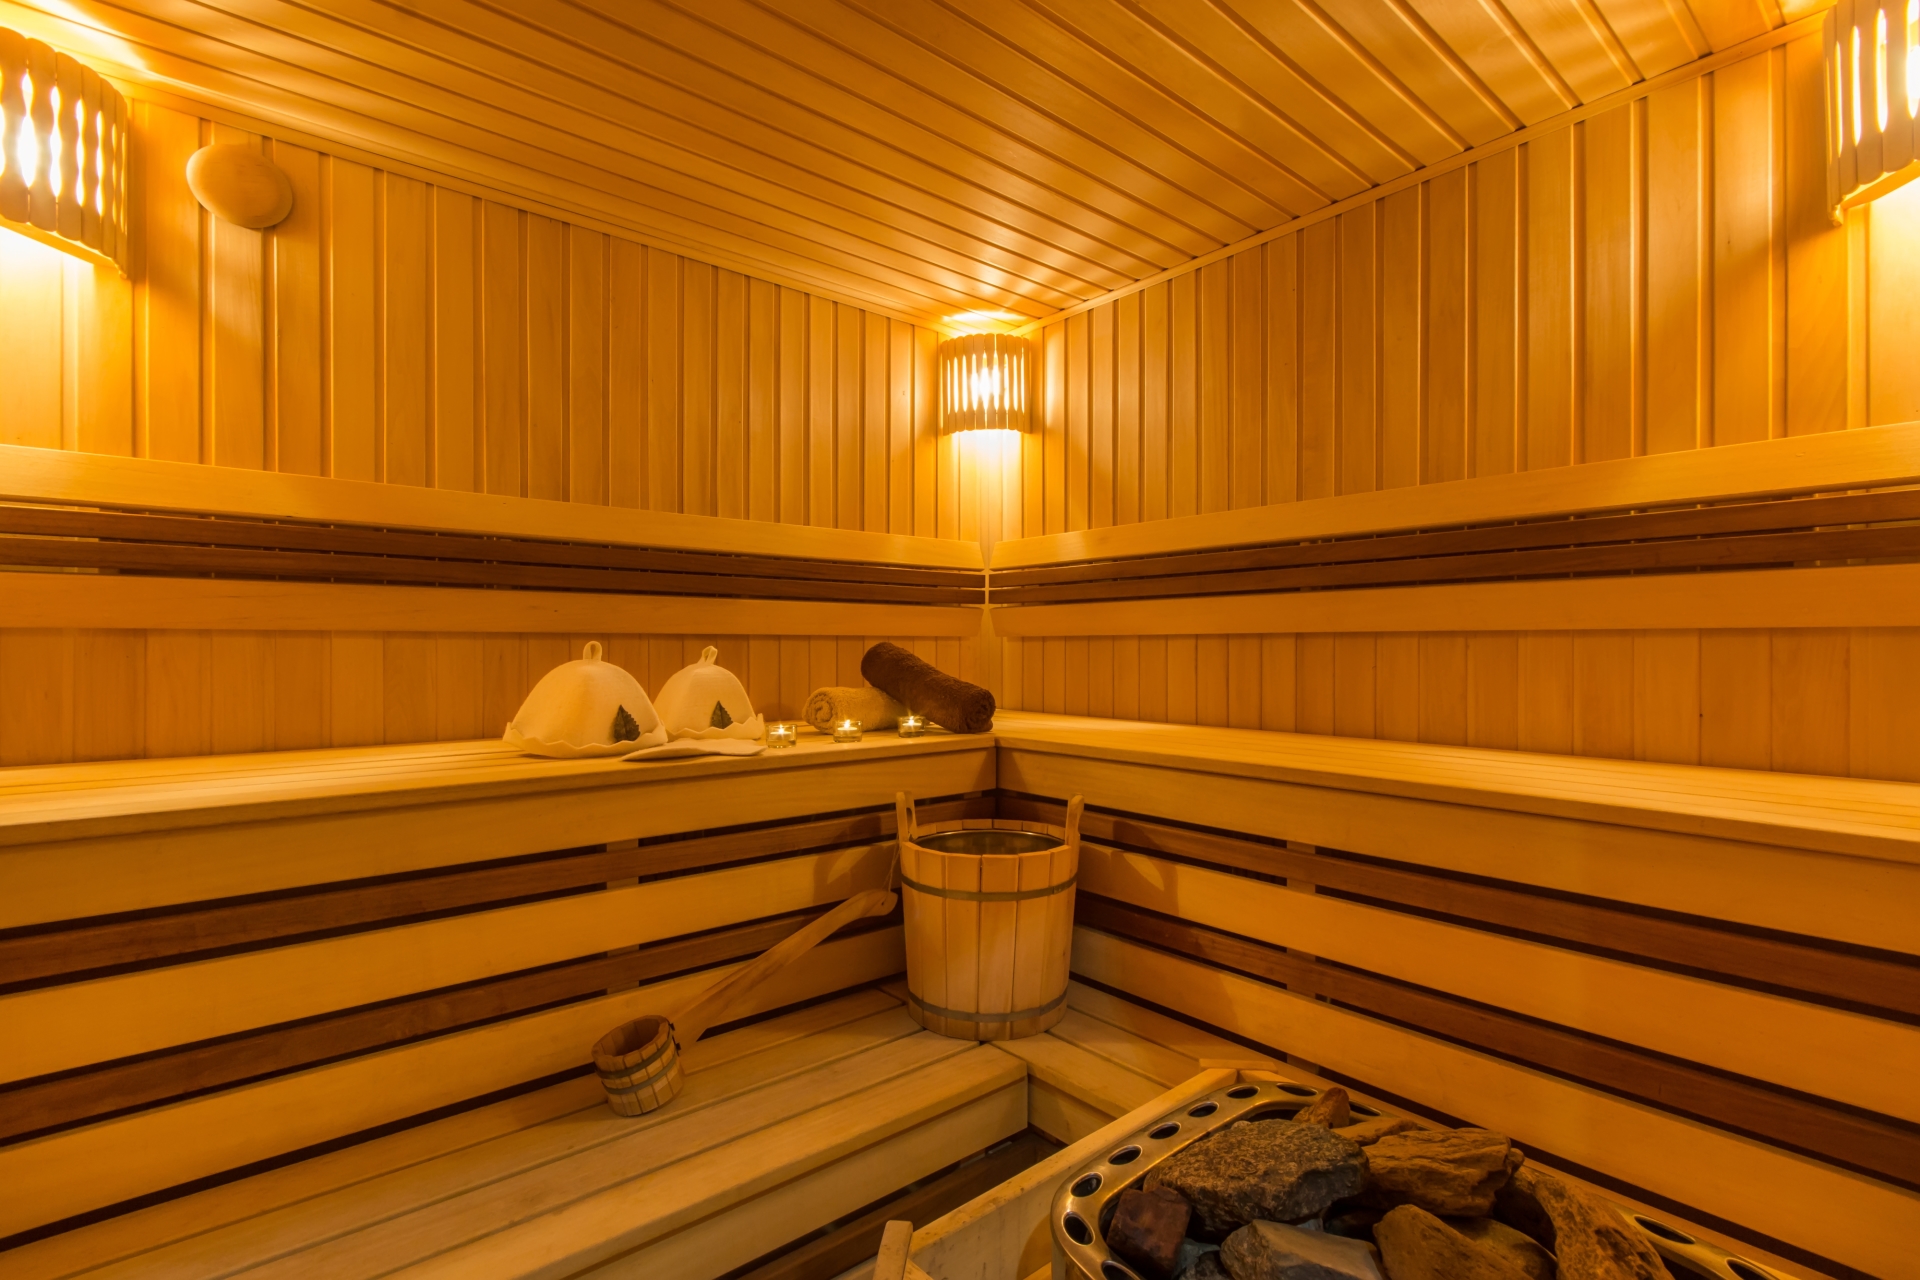 Sauna - Simply Finnish Lapland